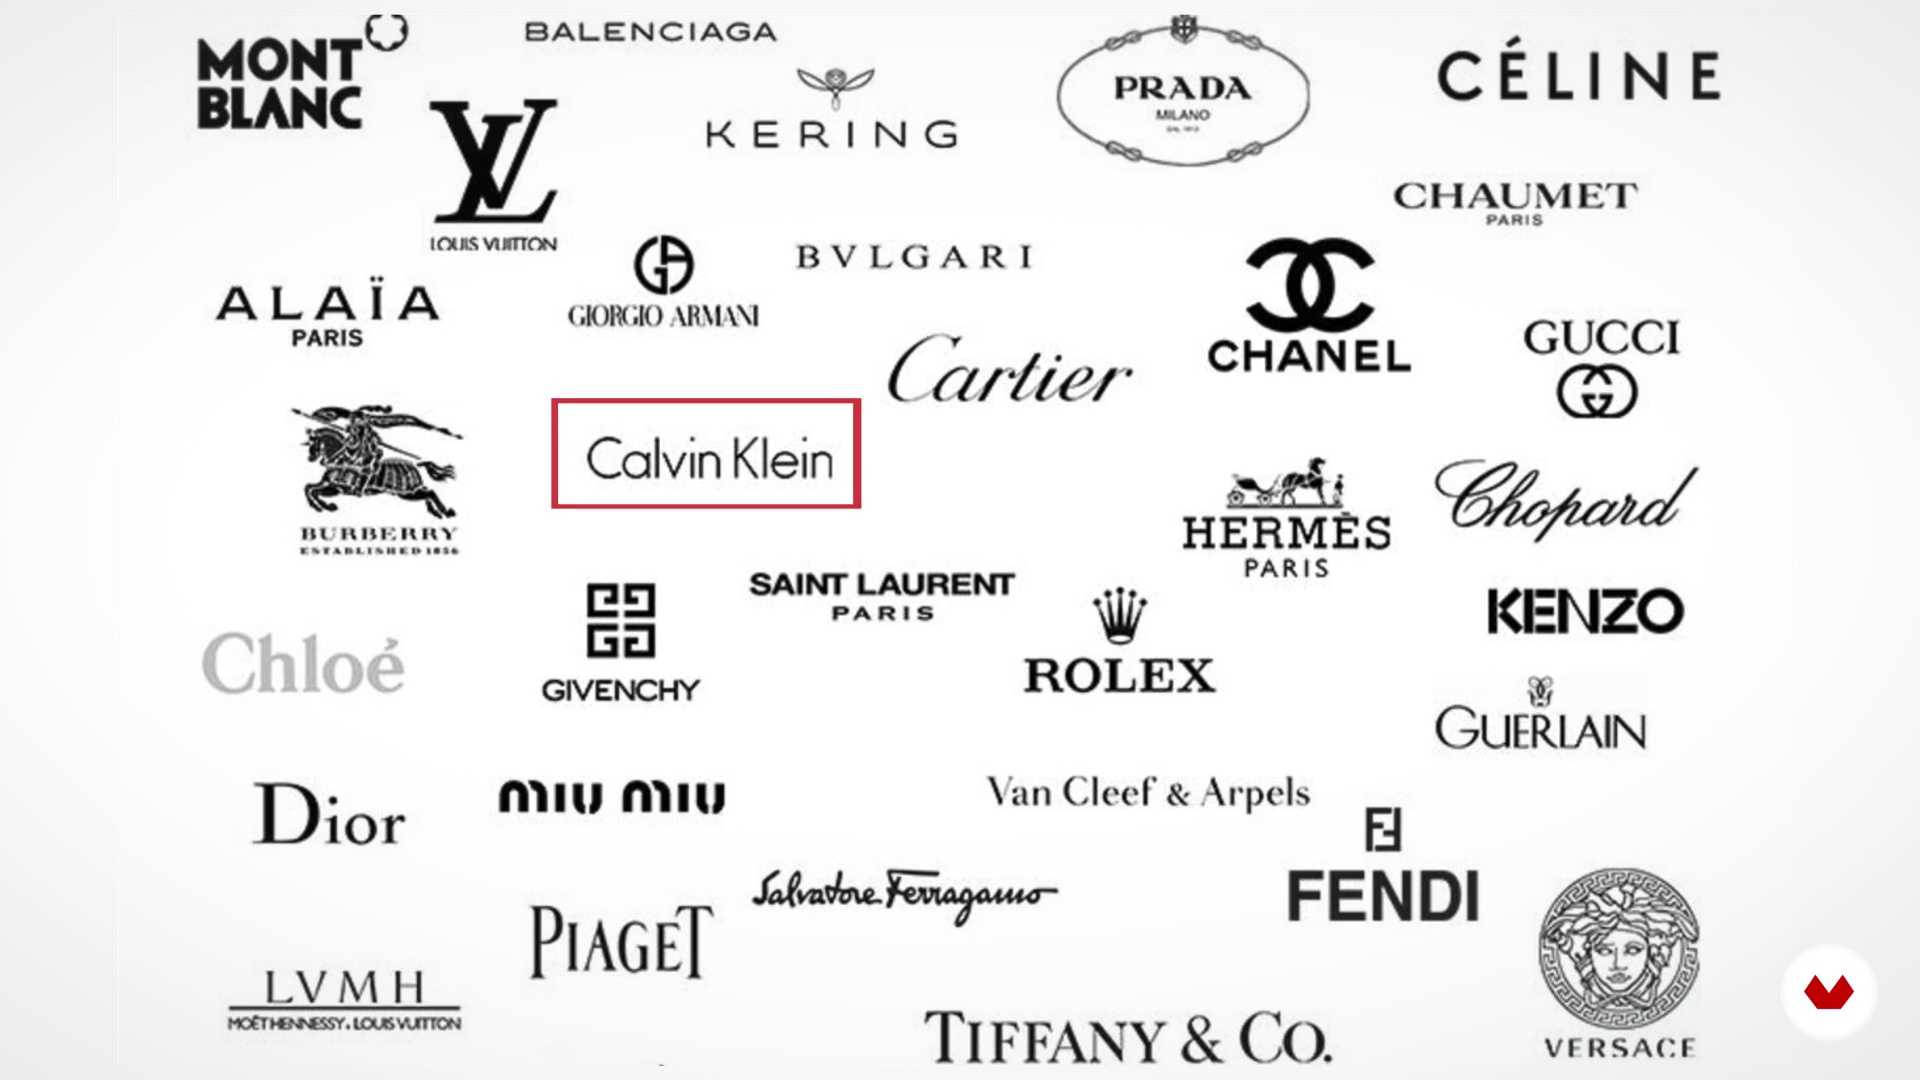 Названия известных марок. Бренды одежды. Логотипы брендов одежды. Логотипы люксовых брендов одежды. Известные бренды.